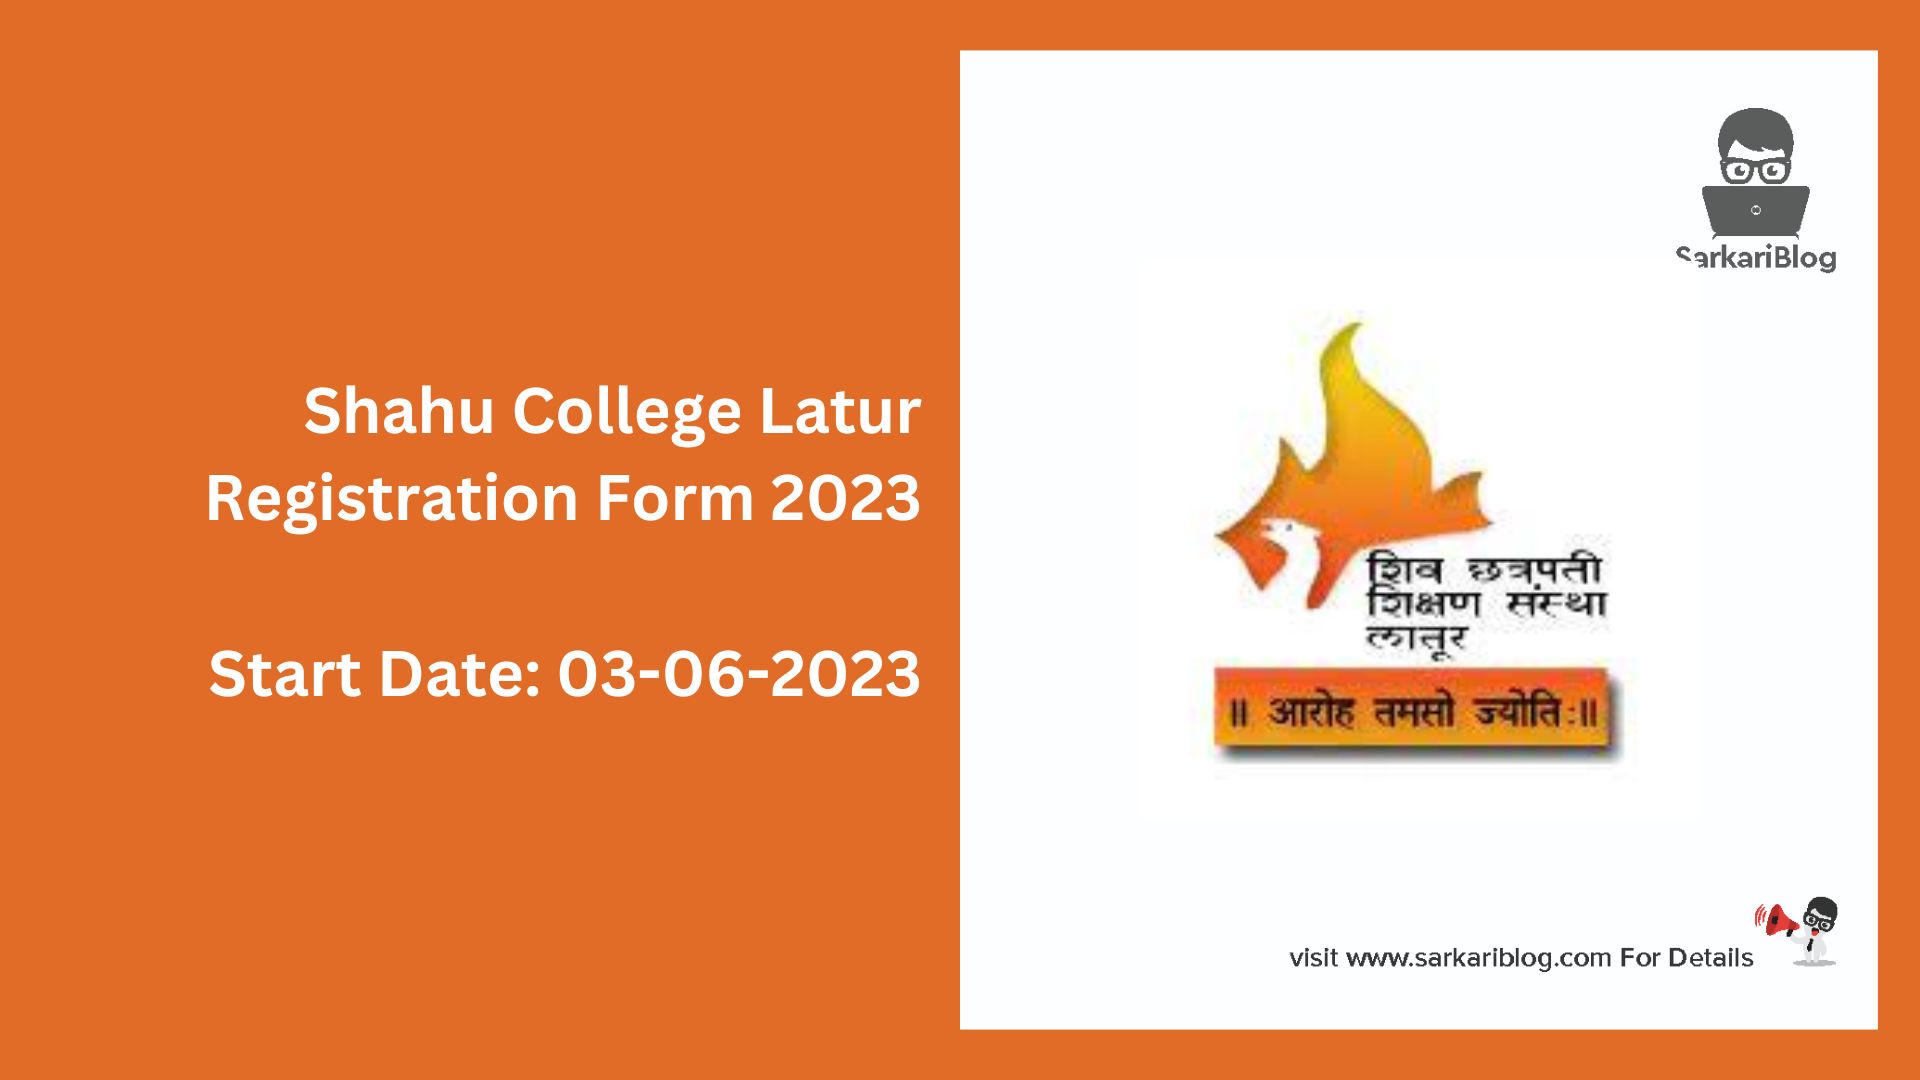 Shahu College Latur Registration Form 2023